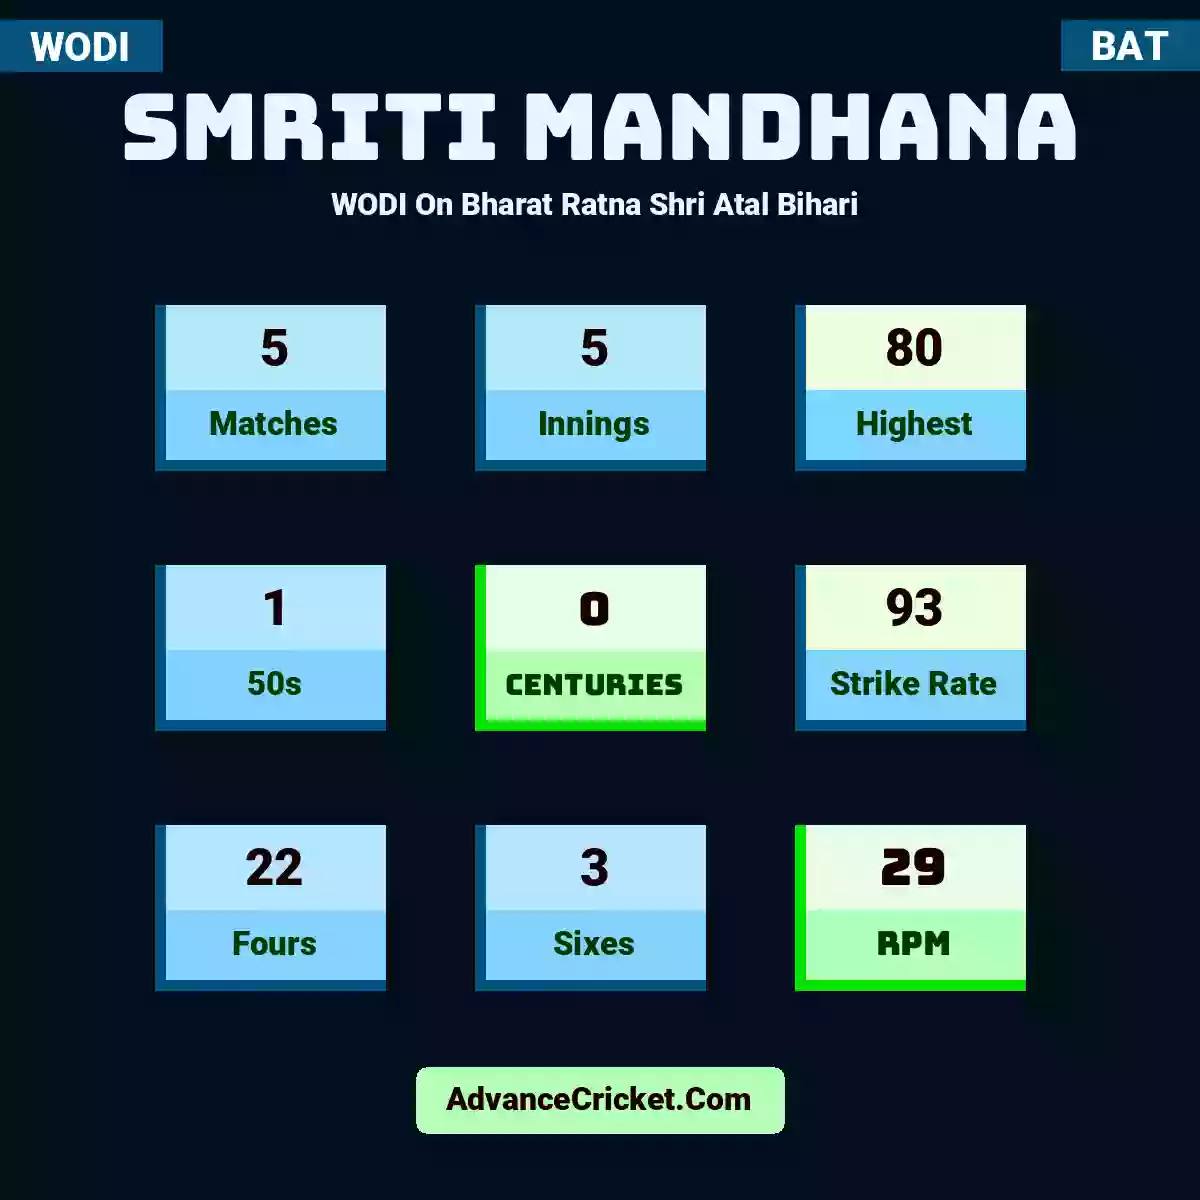 Smriti Mandhana WODI  On Bharat Ratna Shri Atal Bihari , Smriti Mandhana played 5 matches, scored 80 runs as highest, 1 half-centuries, and 0 centuries, with a strike rate of 93. S.Mandhana hit 22 fours and 3 sixes, with an RPM of 29.